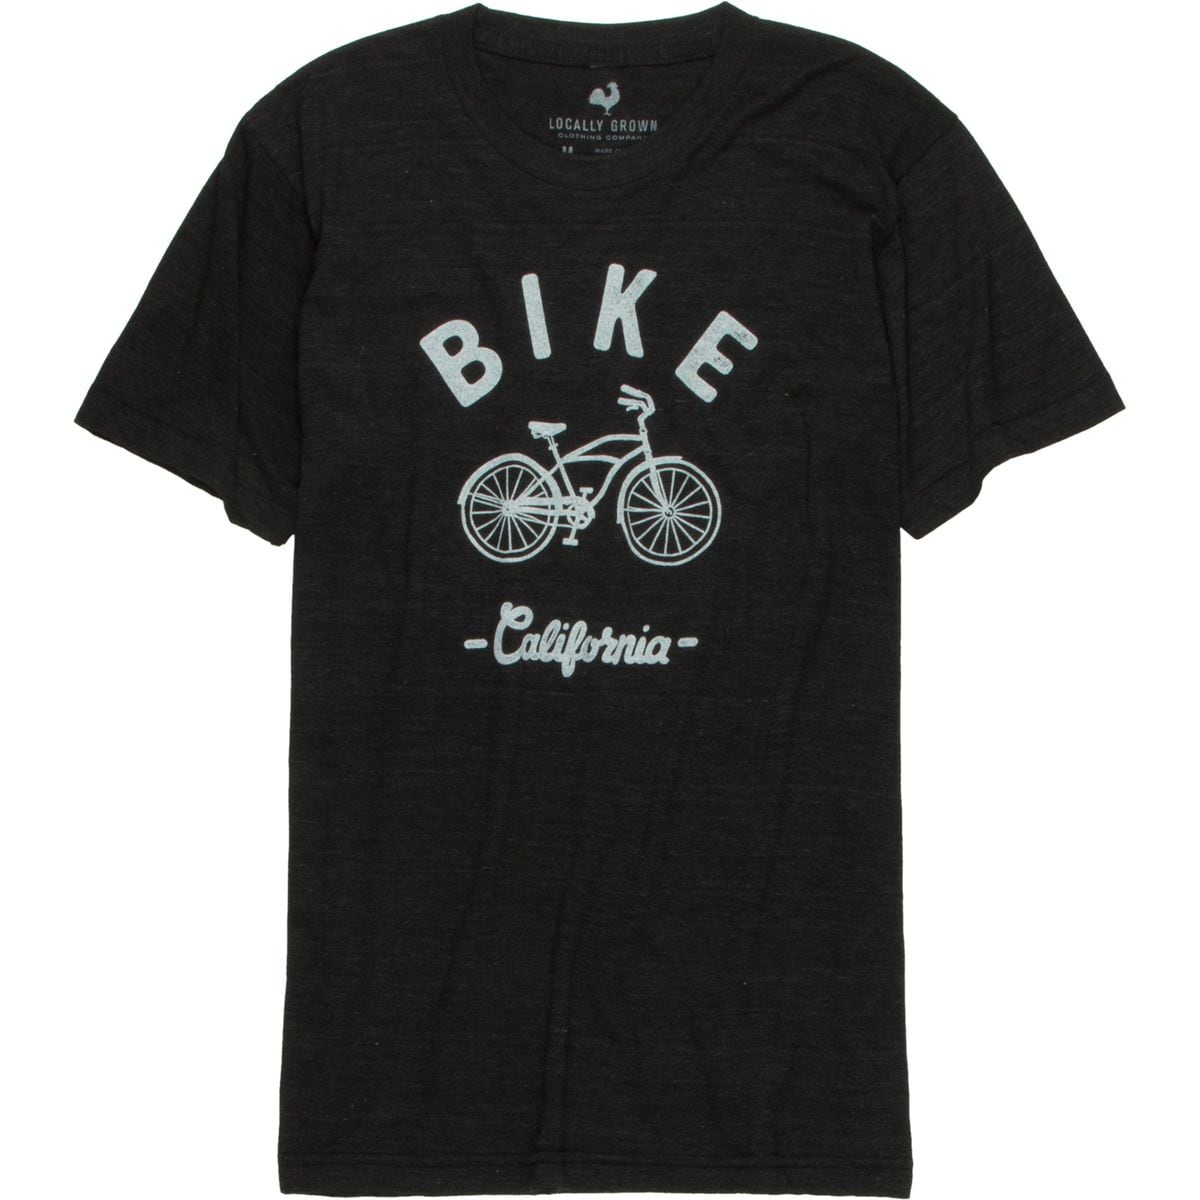 Locally Grown Bike Cruiser California Tri-Blend Vintage T-Shirt - Short-Sleeve - Men's Vintage Black/White, XL